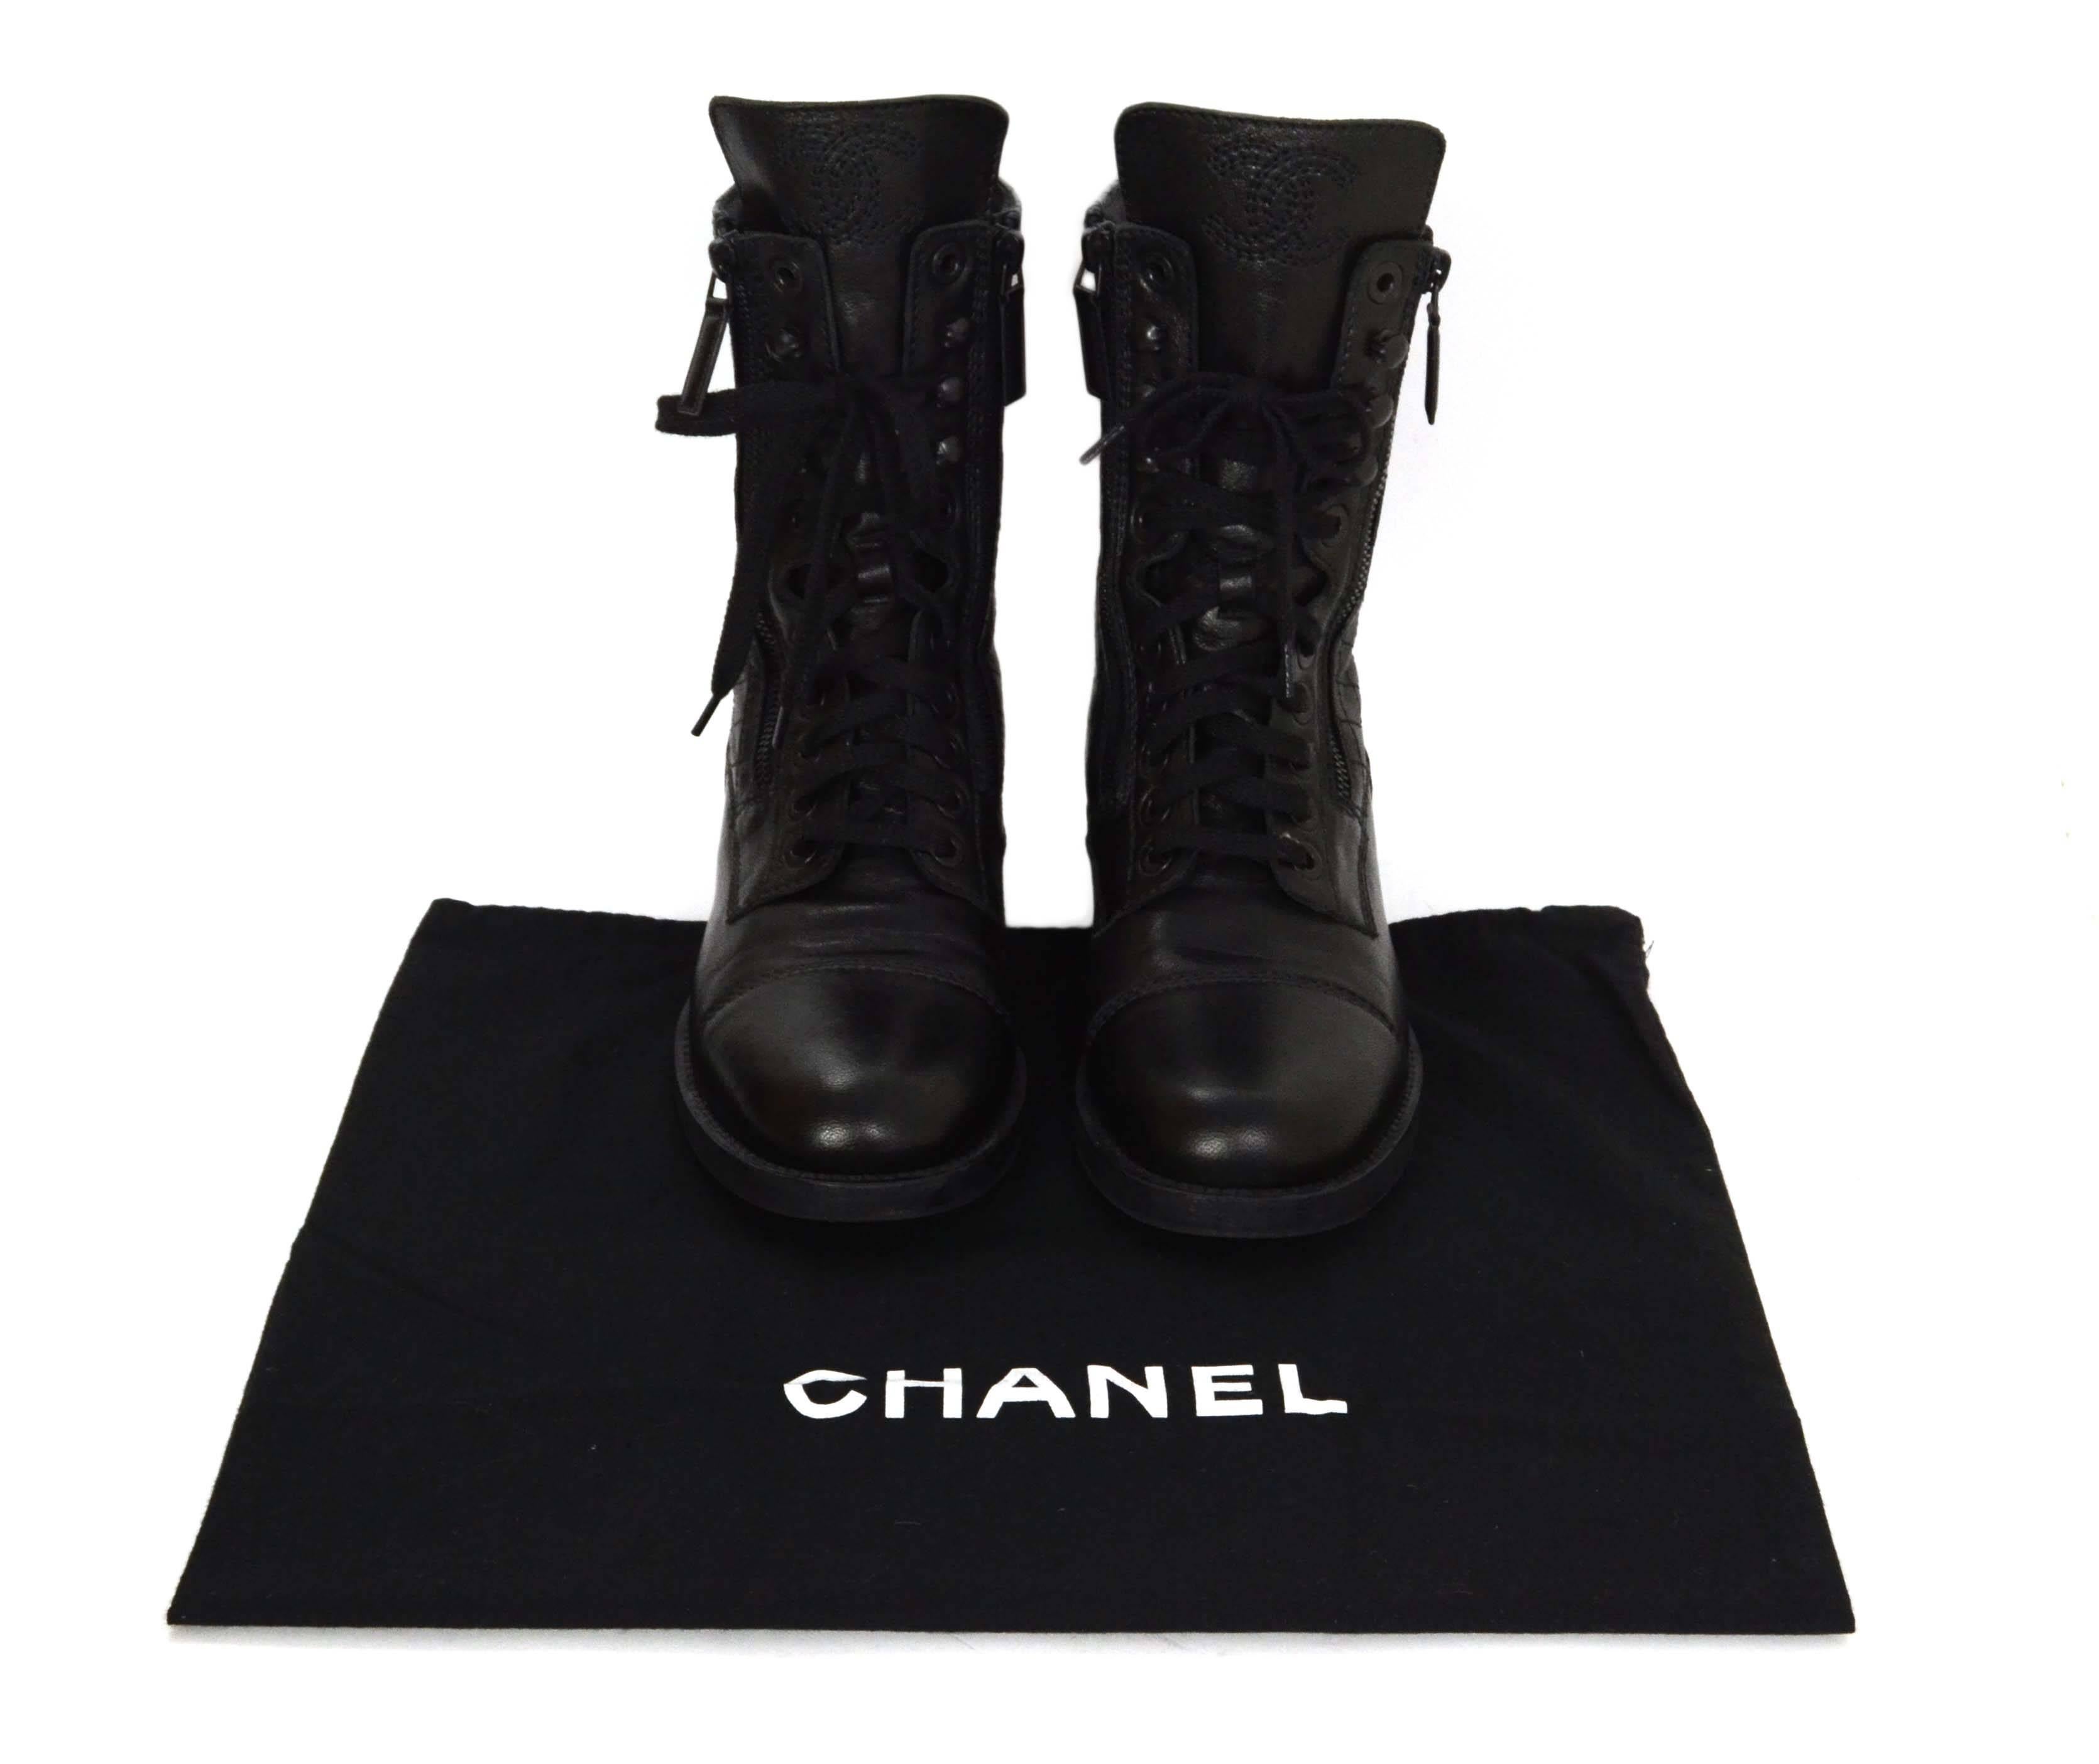 Chanel Black Leather Lace Up Combat Boots sz 39 1